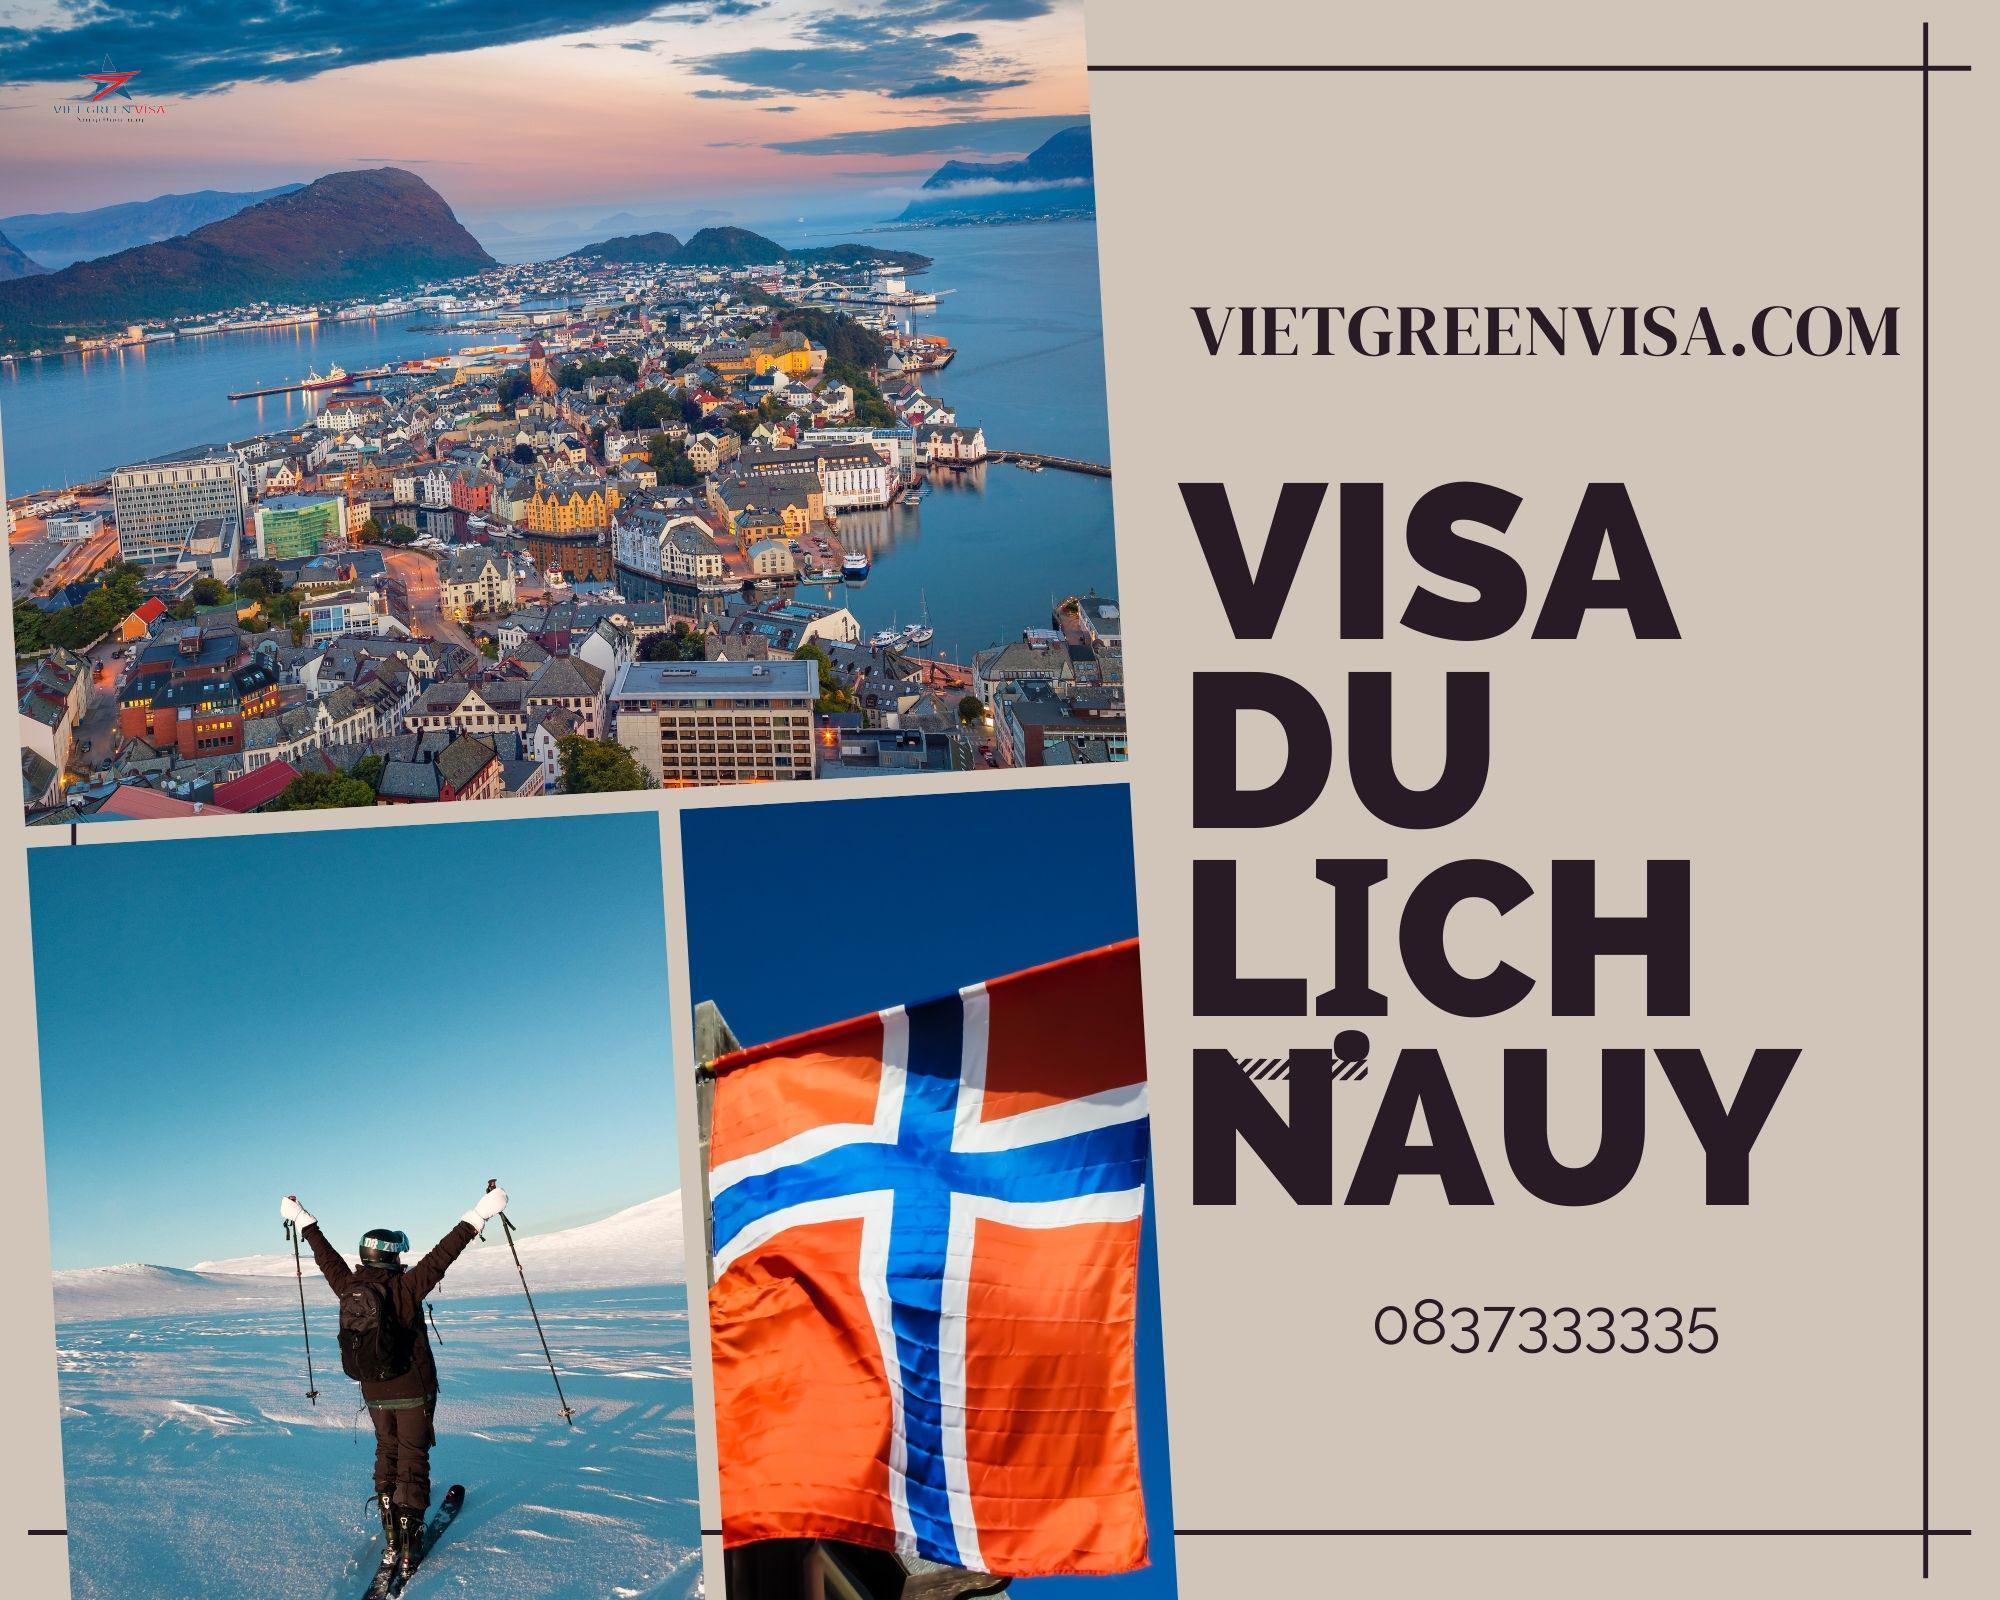 Chia sẻ kinh nghiệm khi xin visa du lịch Na Uy